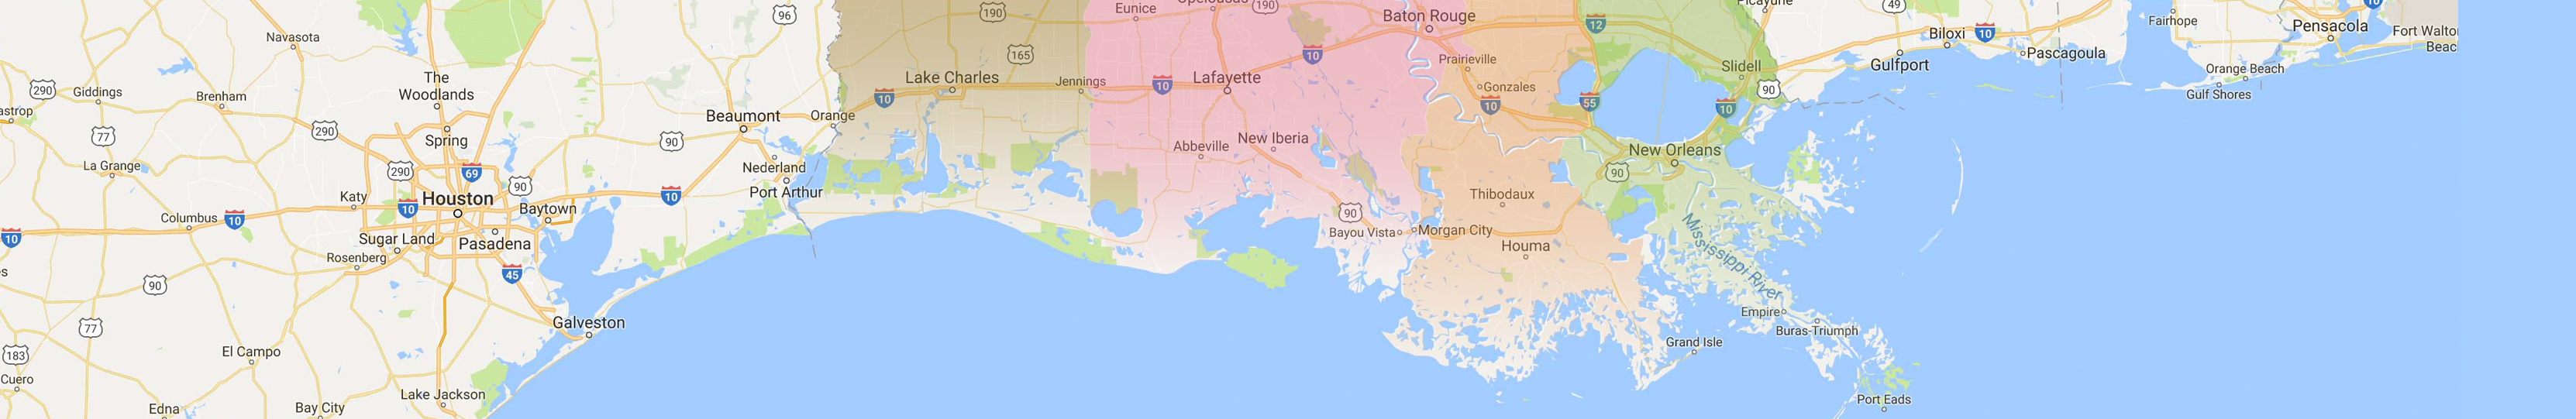 Color map of Louisiana and surrounding gulf coastline, long and narrow, horizontal.